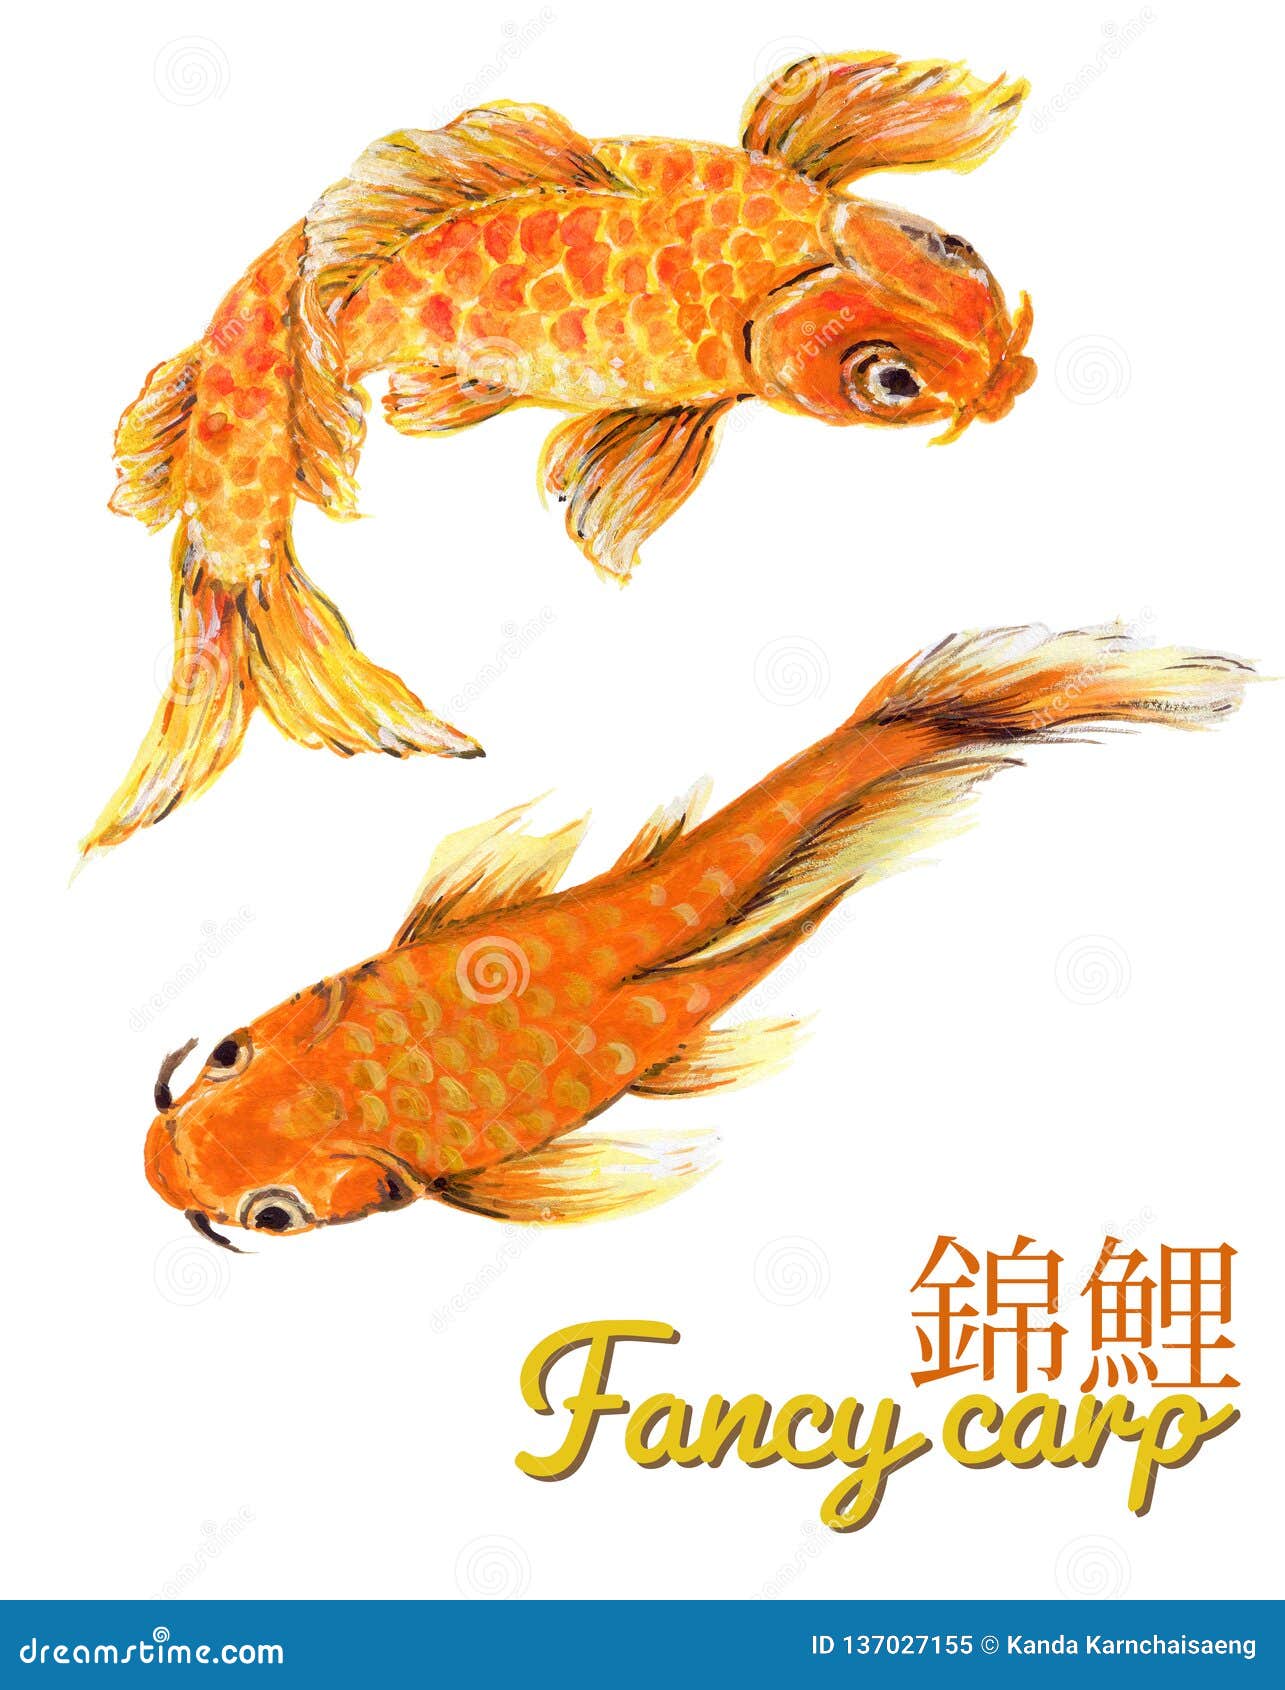 Flexible Stencil *KOI FISH* Jumping Carp Gold Fish Card Making 14cm x 14cm